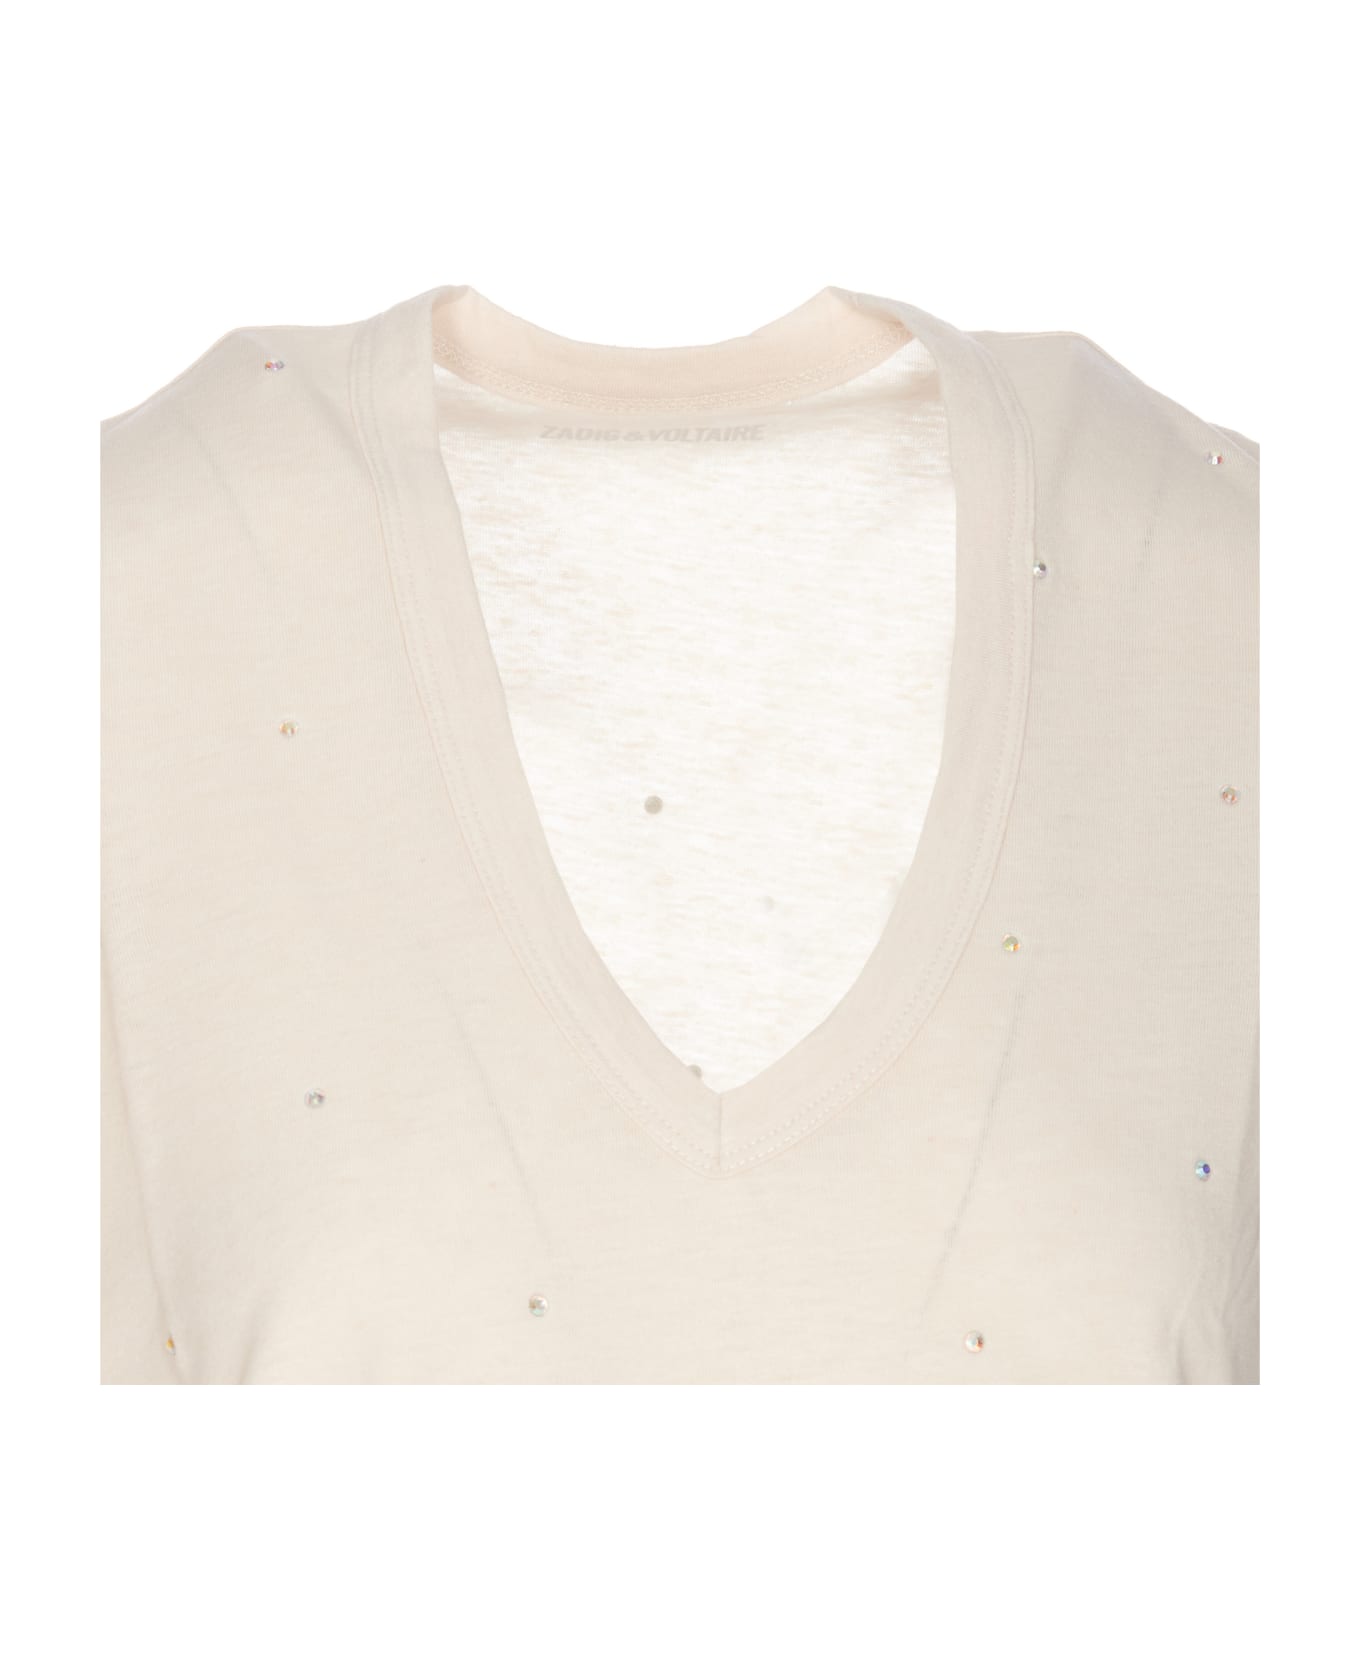 Zadig & Voltaire Wassa Dots Strass T-shirt - White